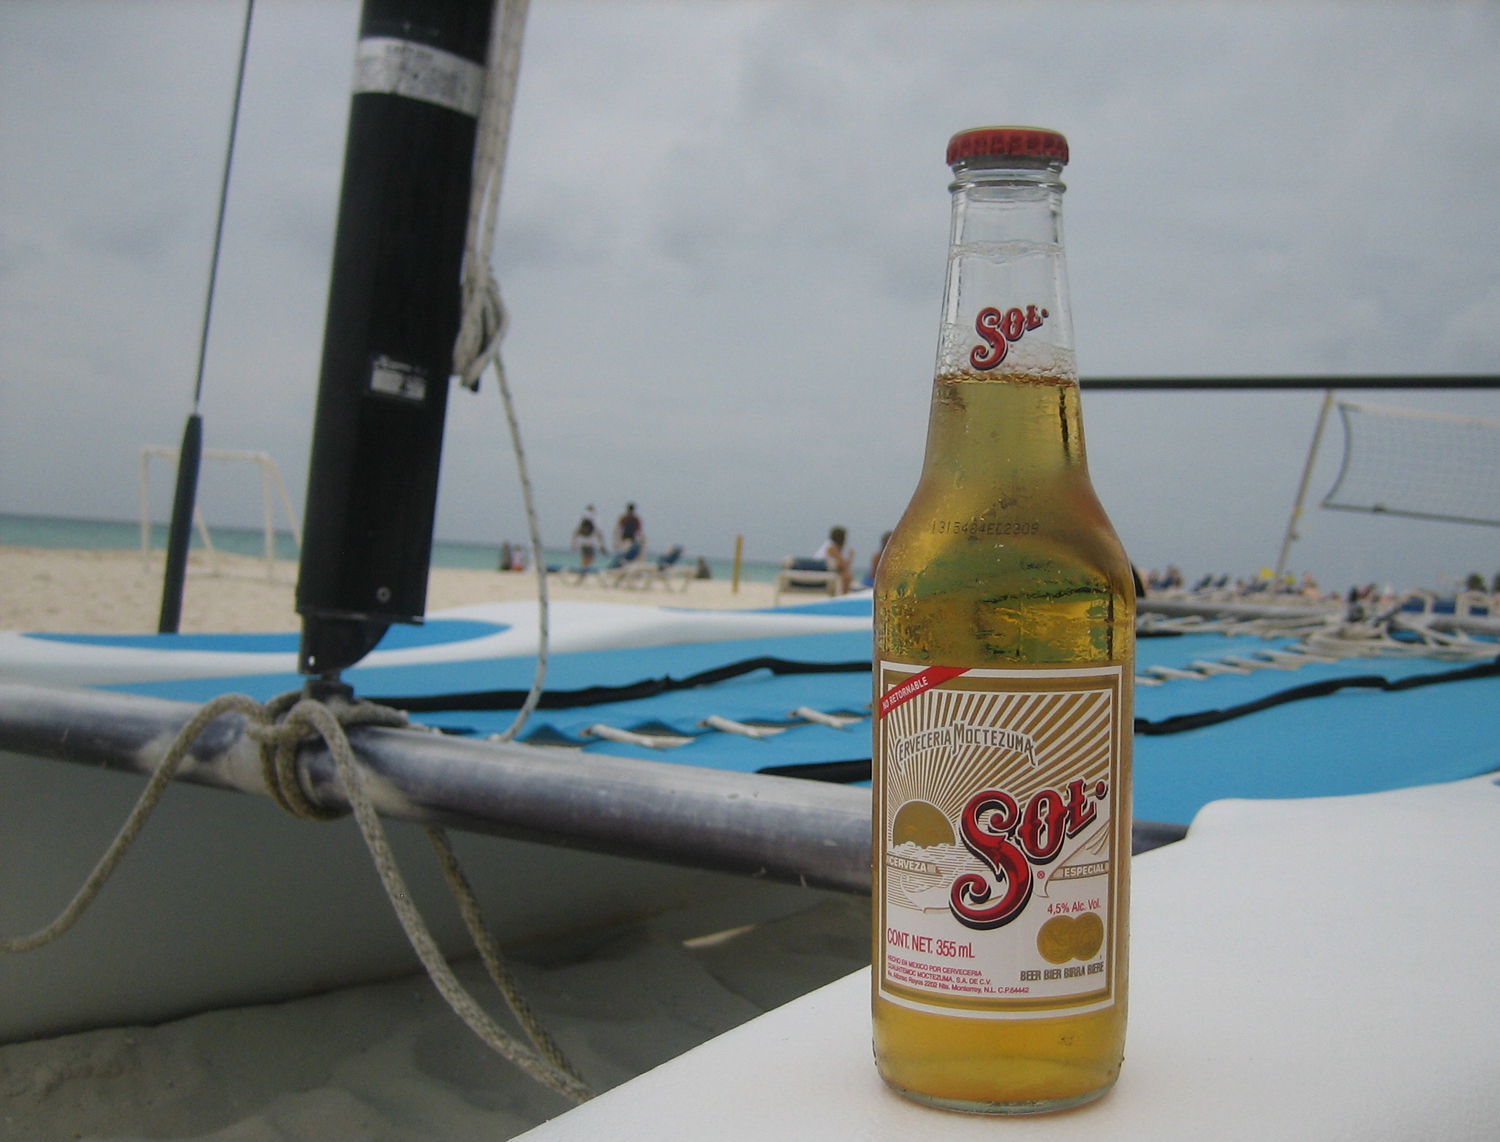 Enjoy summer Sol beer on a Mexican beach or for Cinco de Mayo.